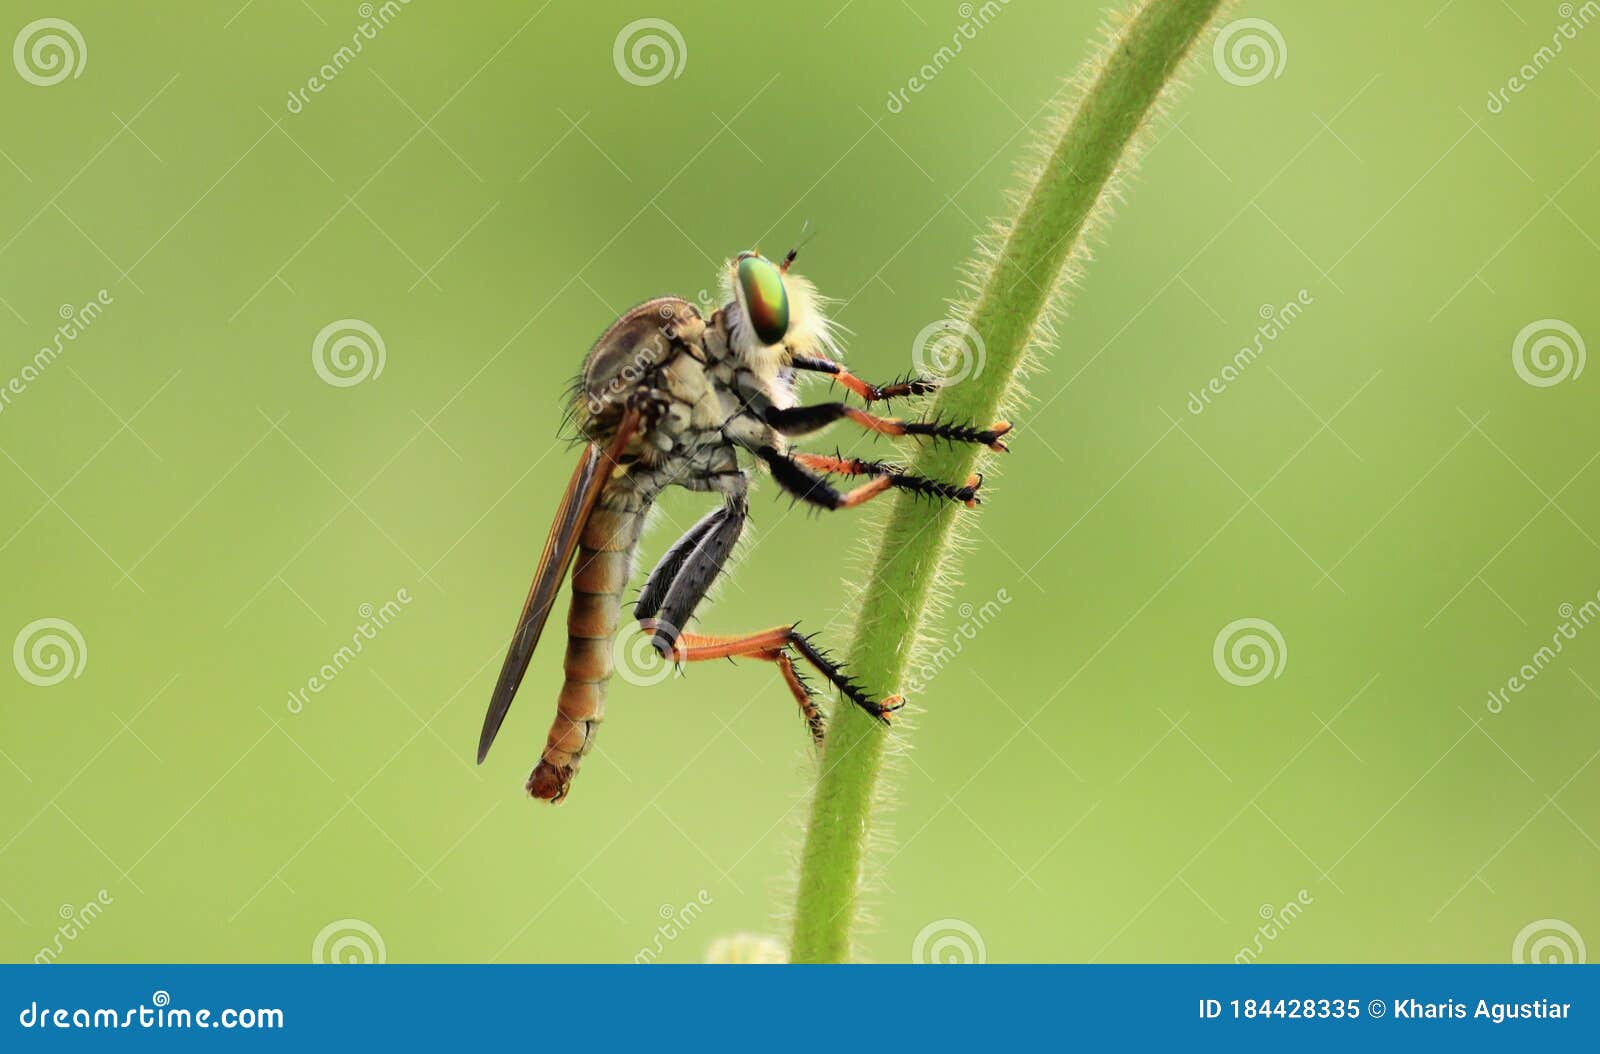 robberfly flies insec lt predator close up